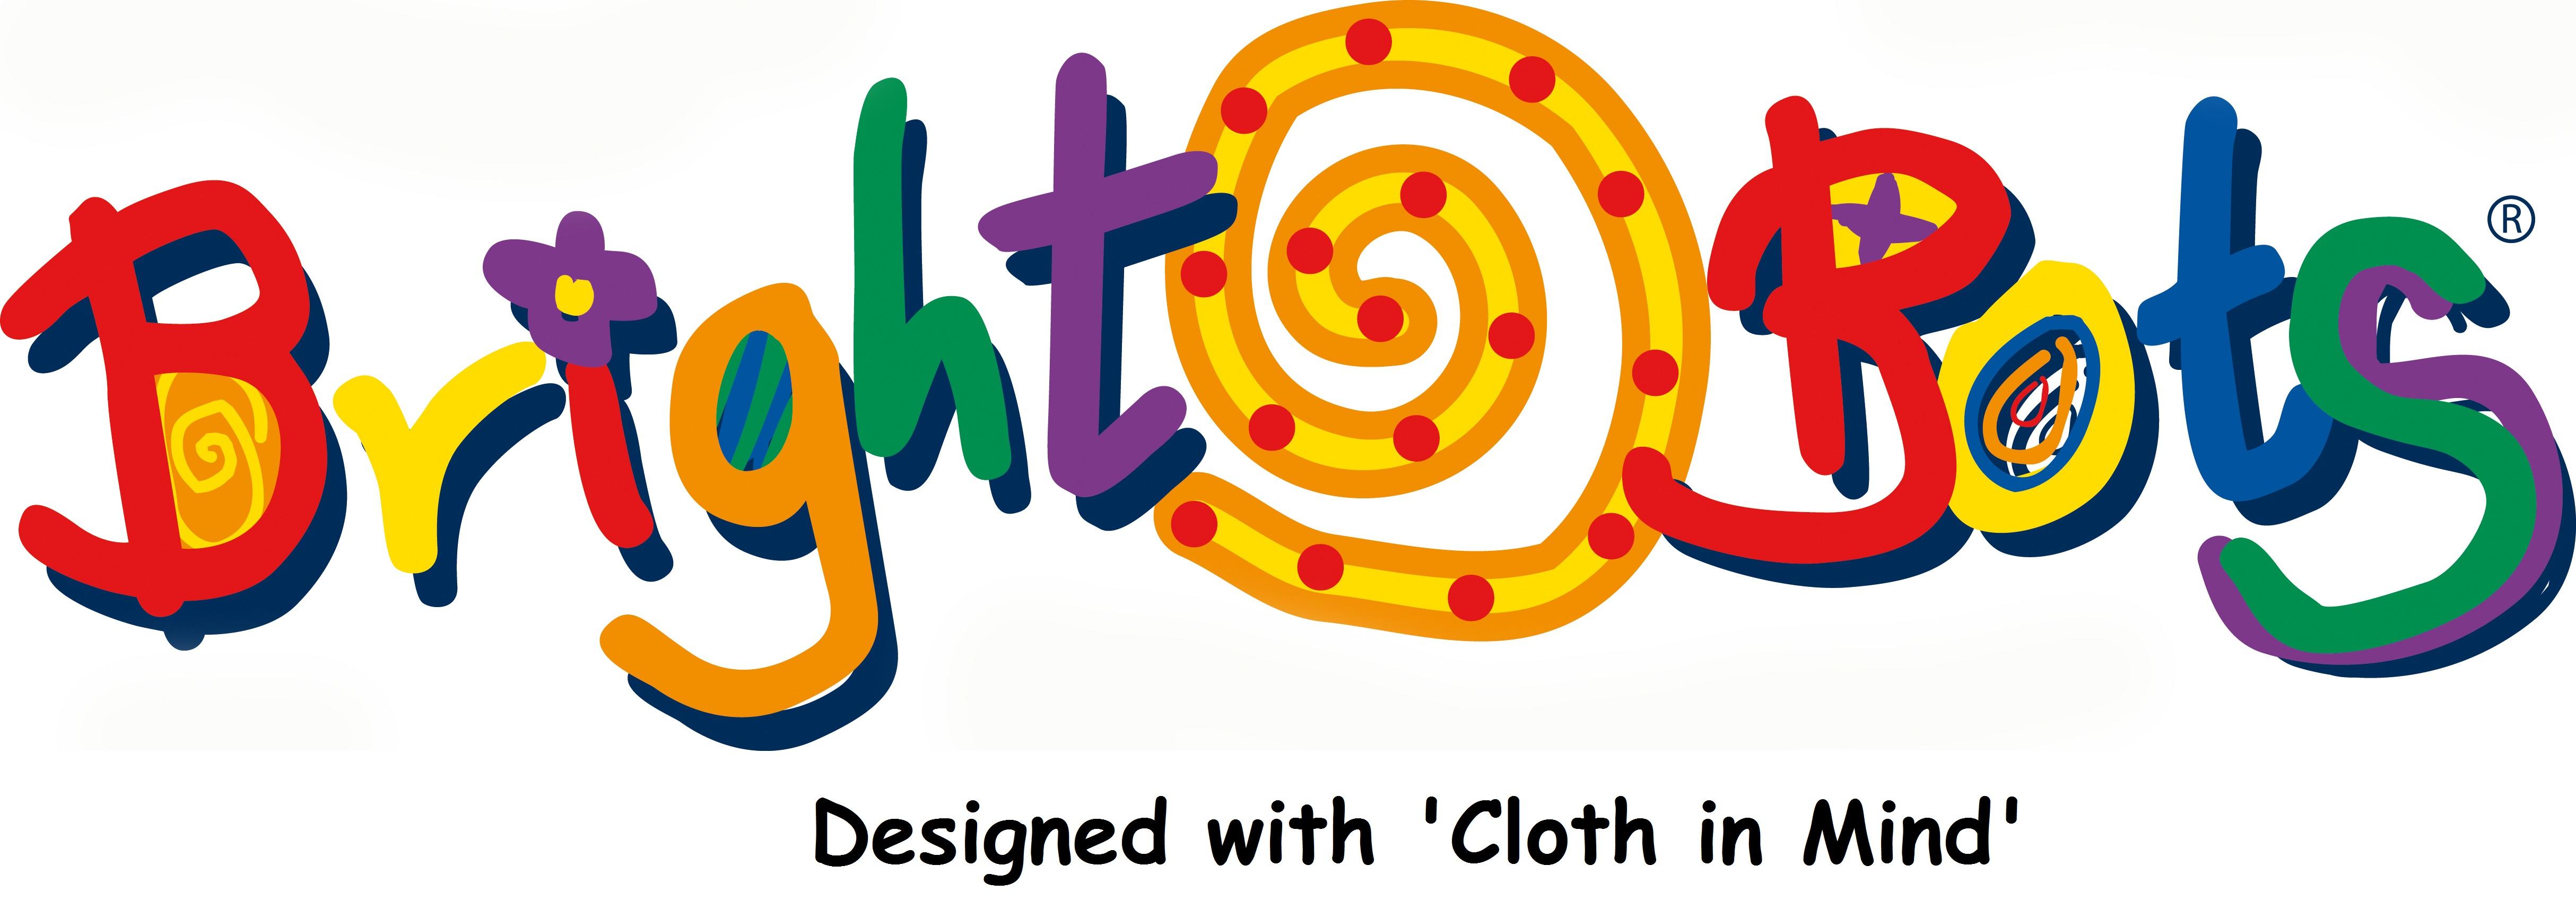 Bright Bots logo in written name format